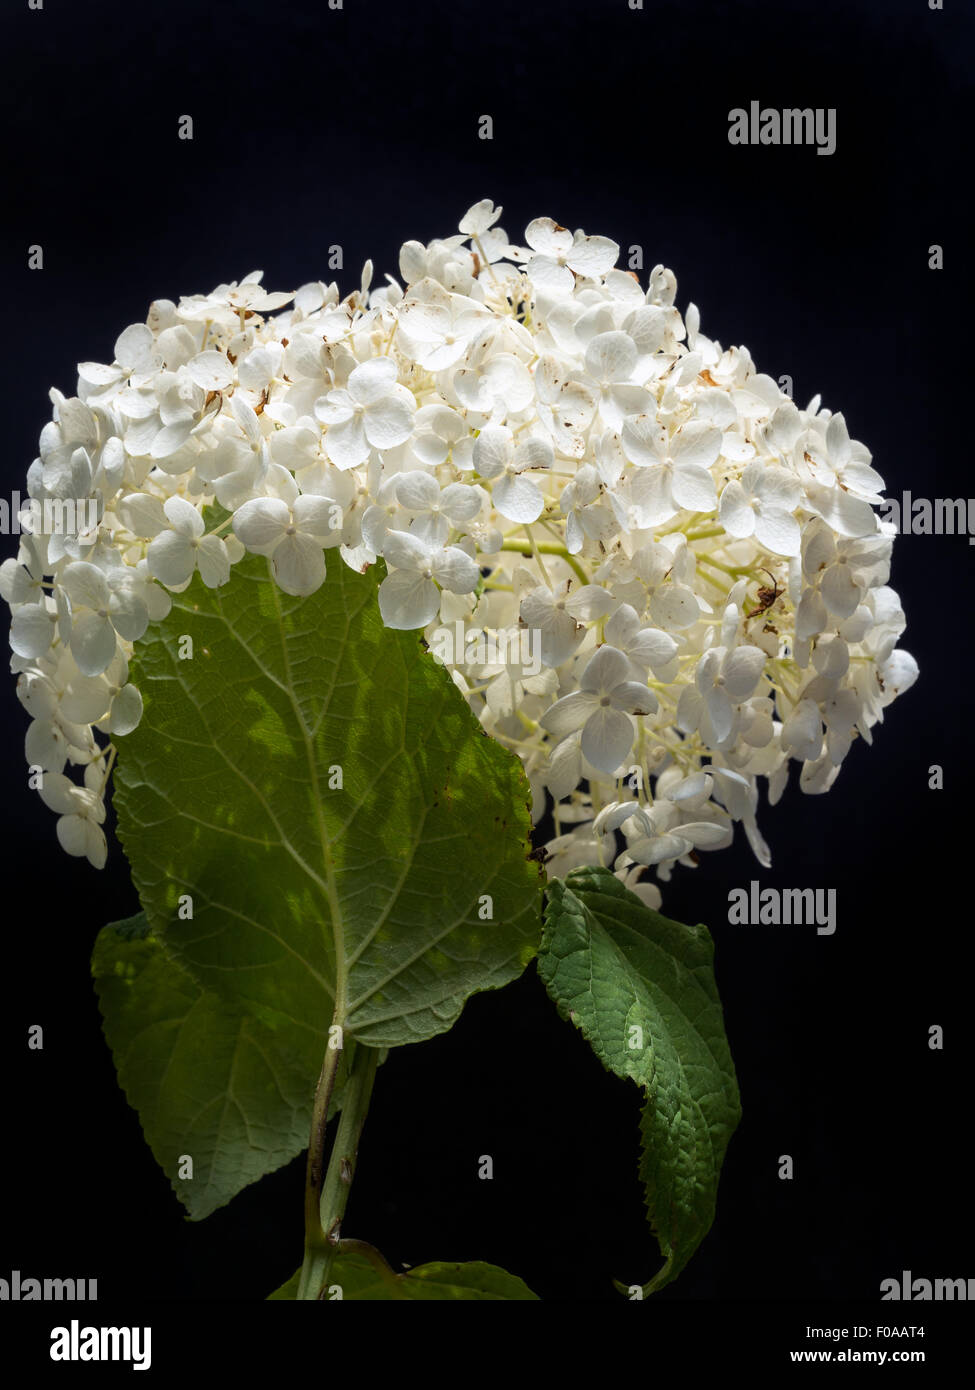 Hydrangea Arborescens Annabelle flores blancas sobre fondo negro Foto de stock